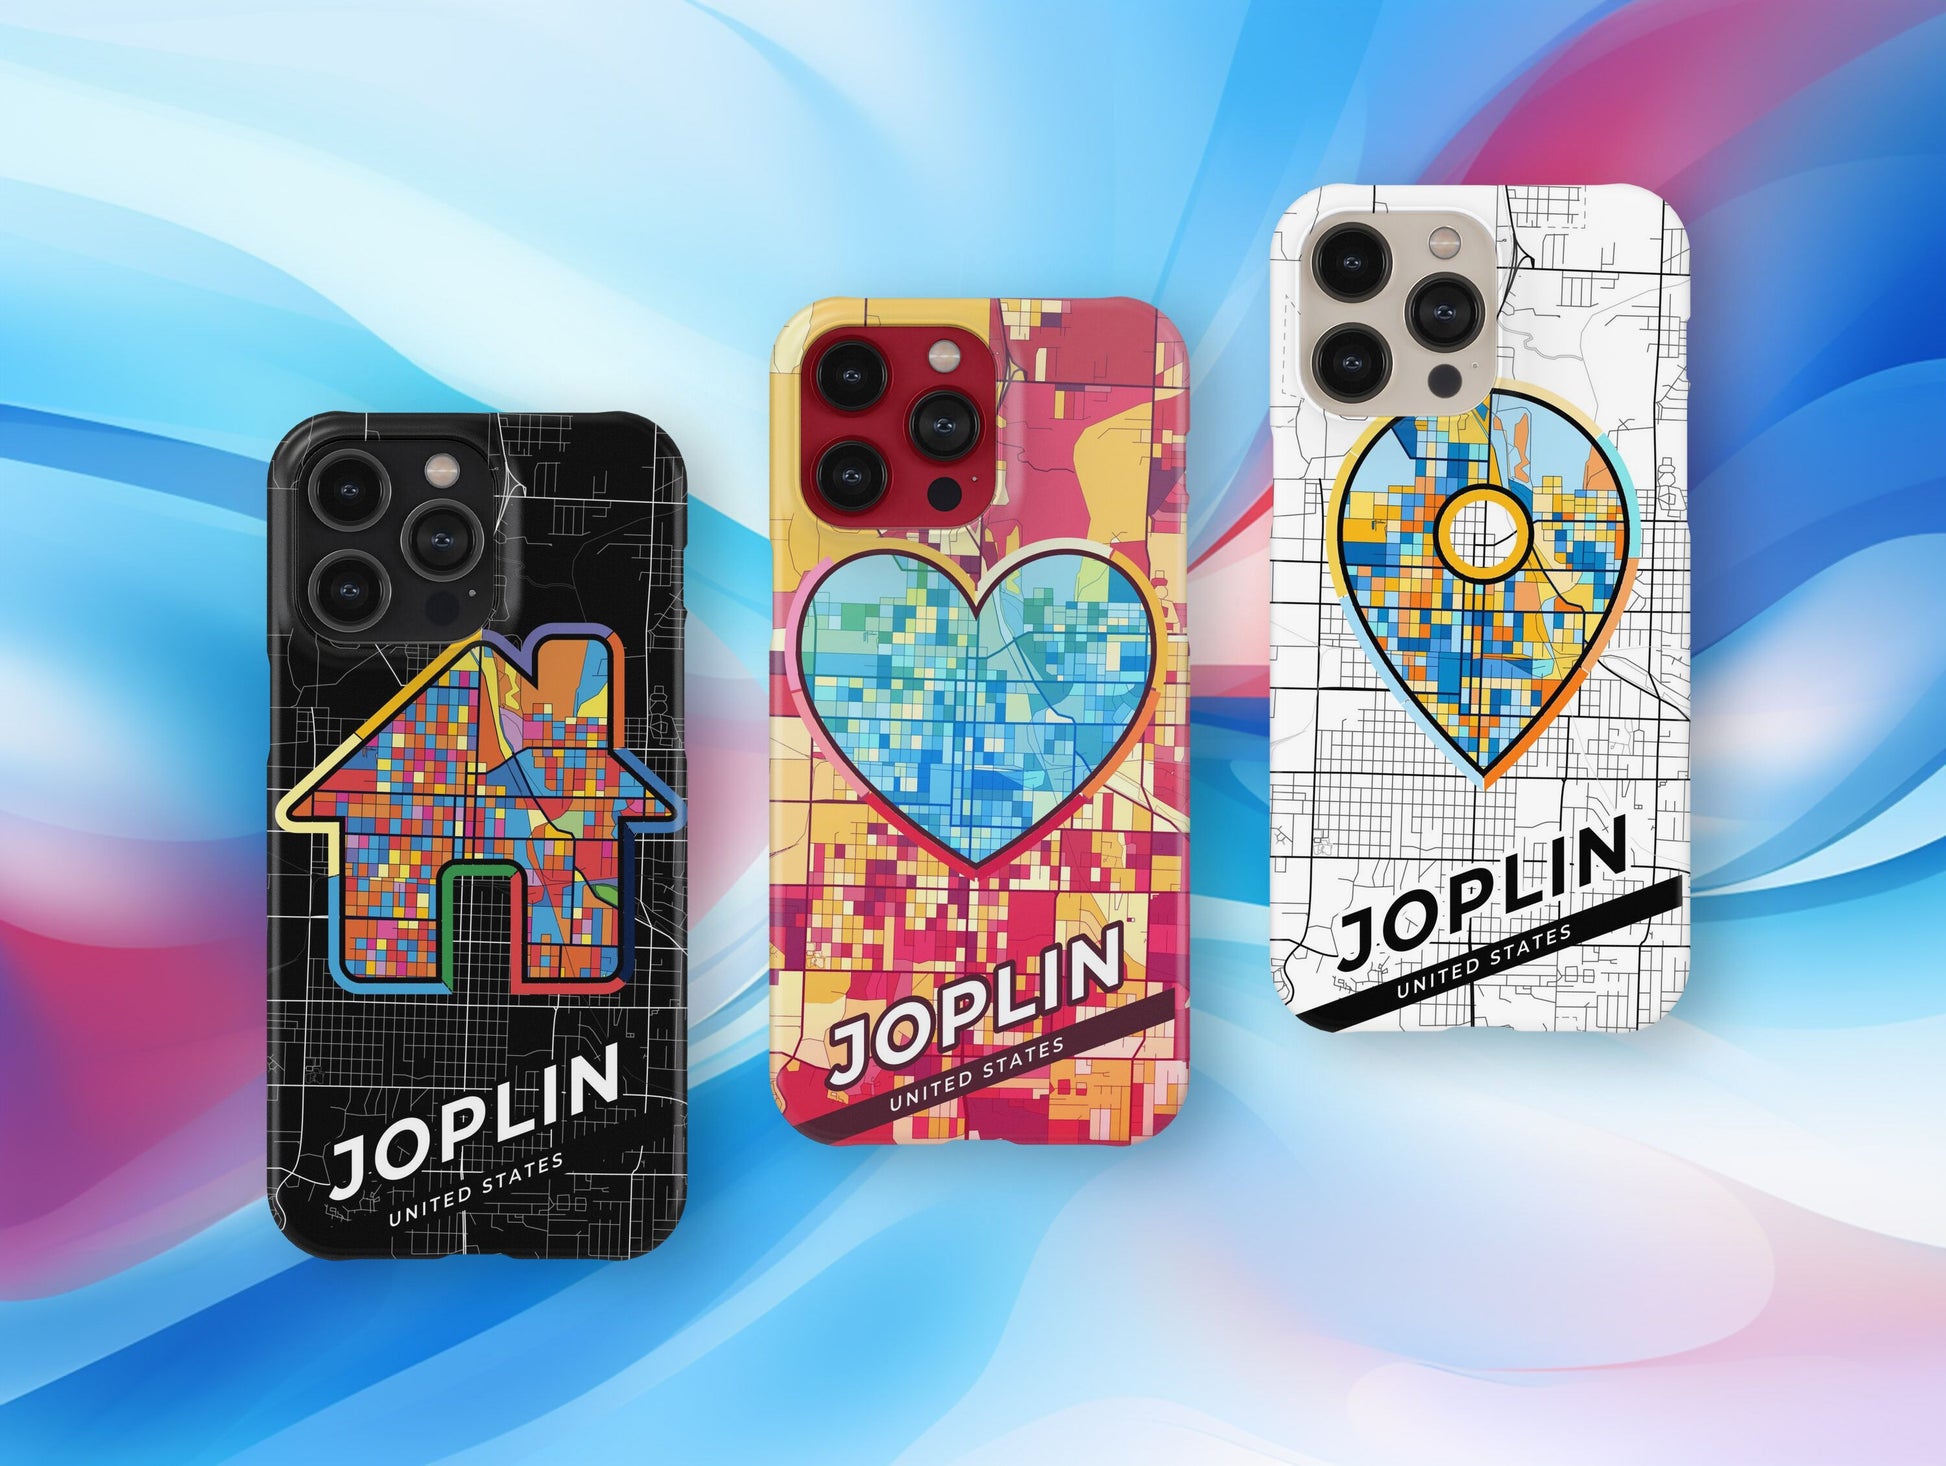 Joplin Missouri slim phone case with colorful icon. Birthday, wedding or housewarming gift. Couple match cases.